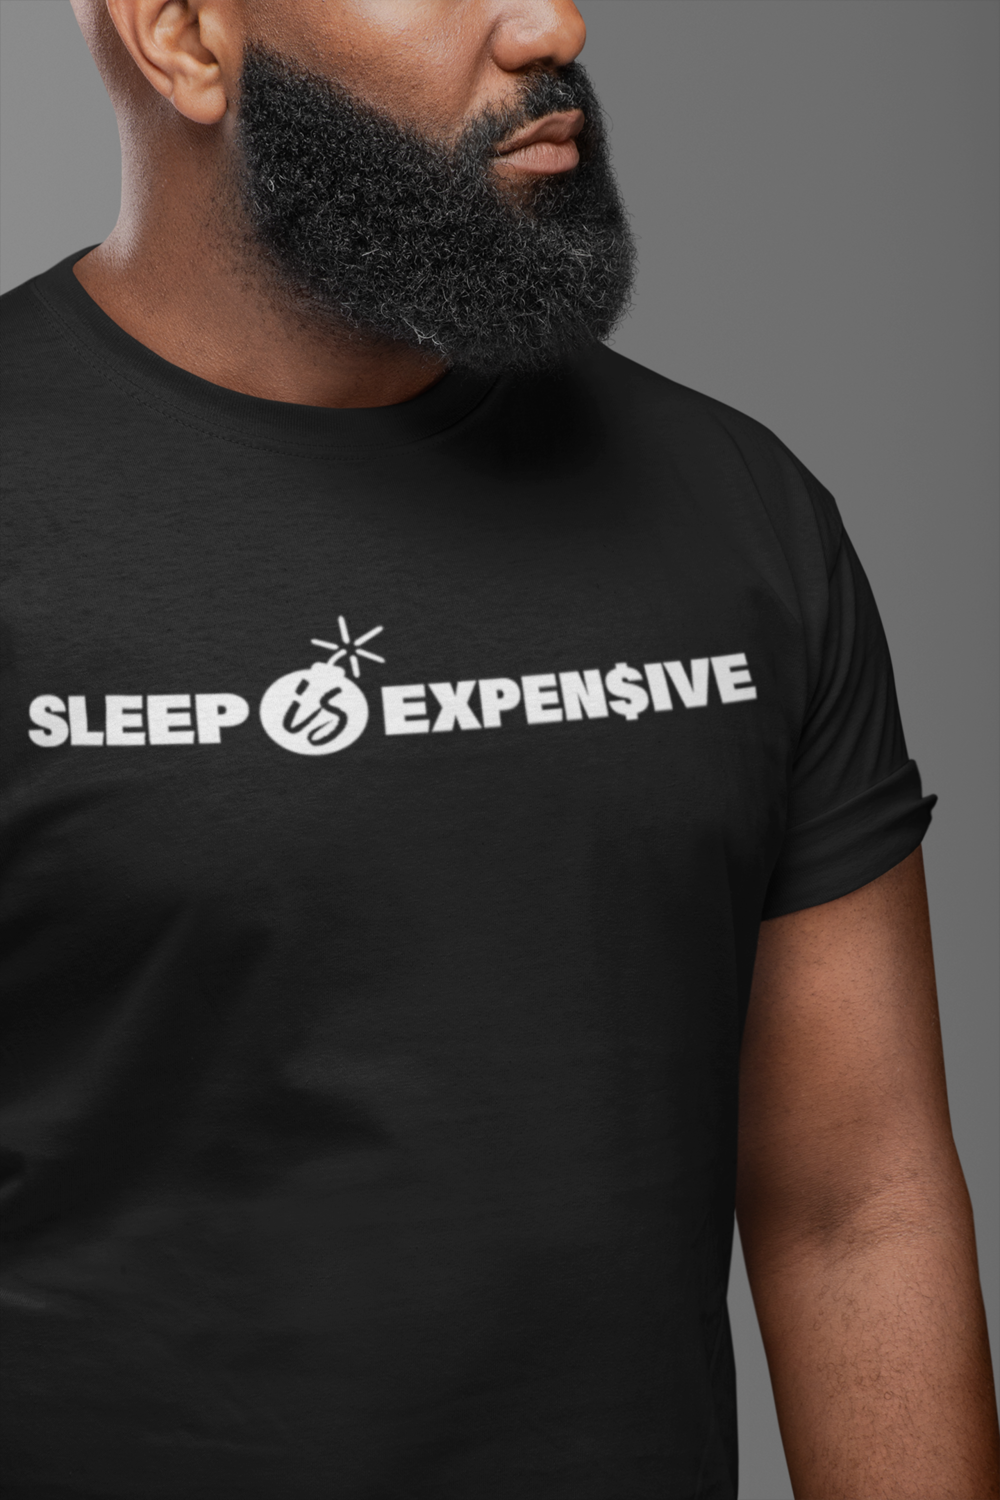 Sleep Is Expen$ive (White Text) Short-Sleeve Unisex T-Shirt